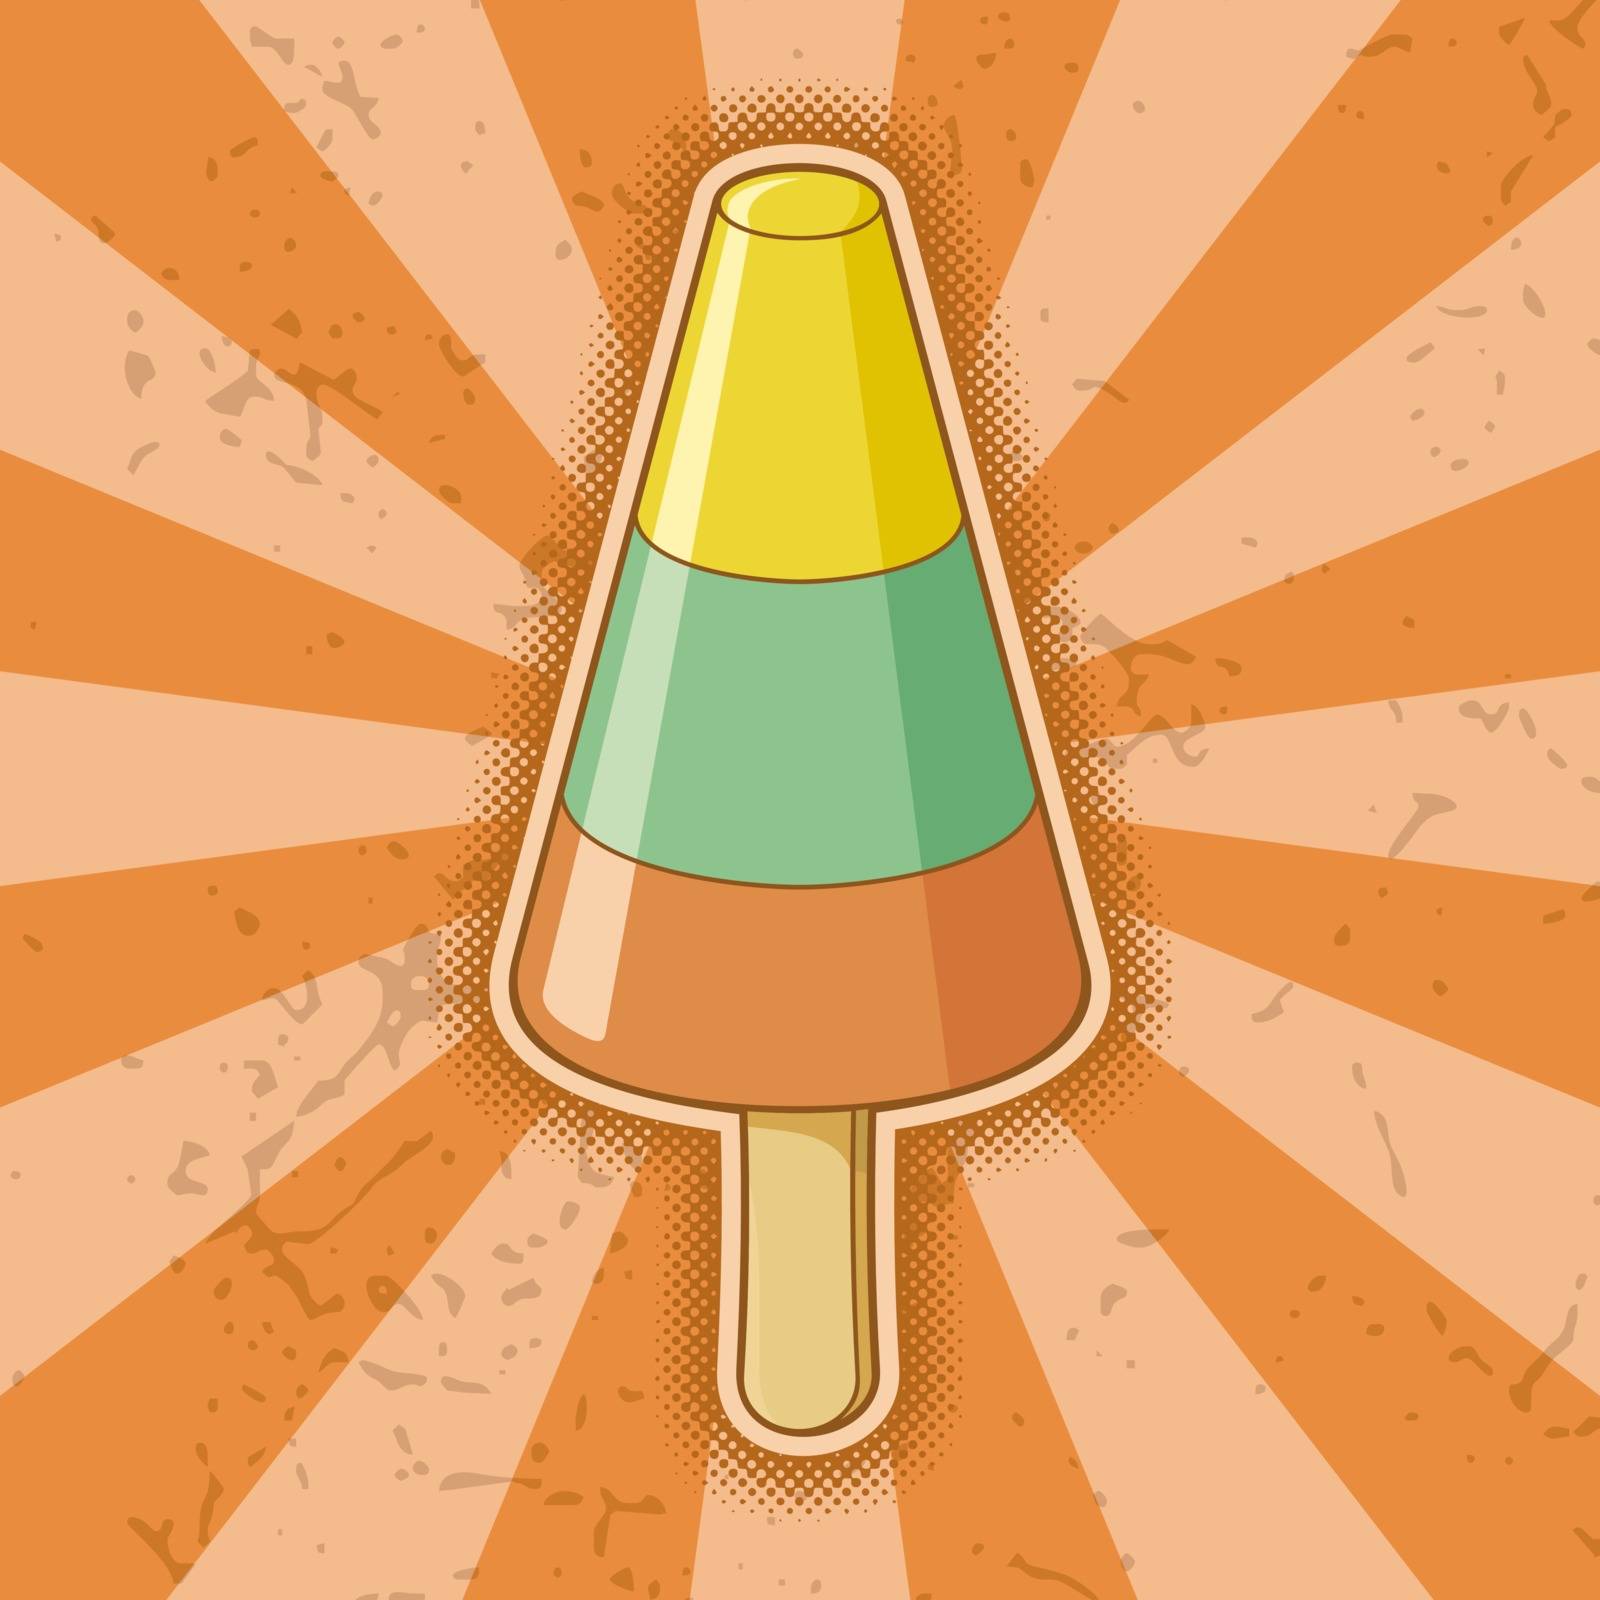 Multicolored sorbet stick icon on orange grunge background.